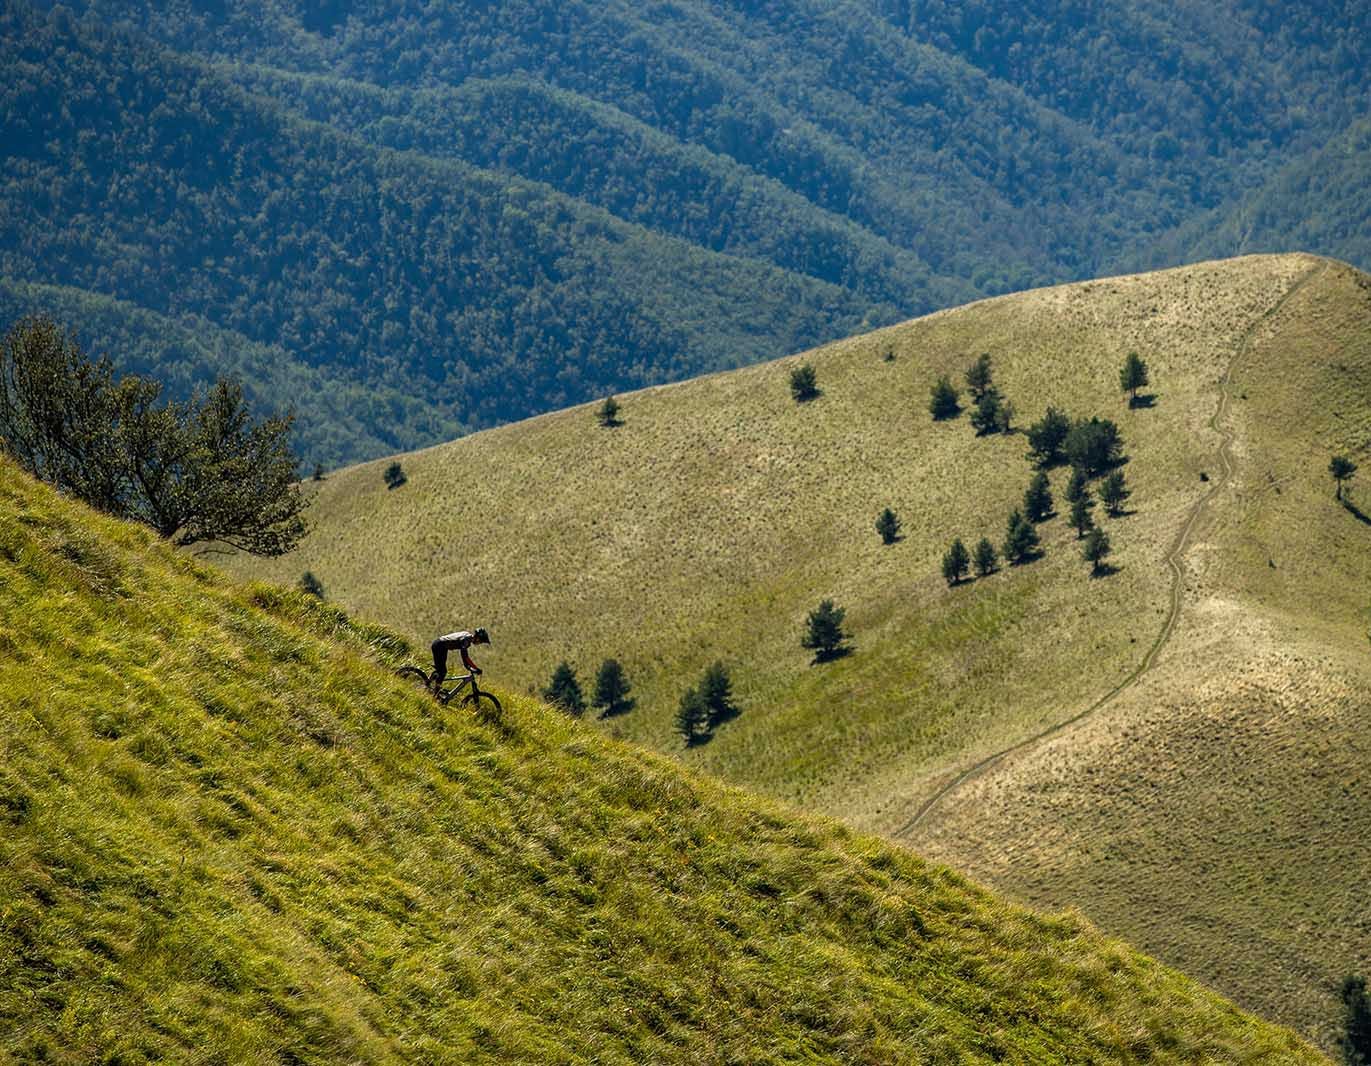 Mountain bike trail in the hills